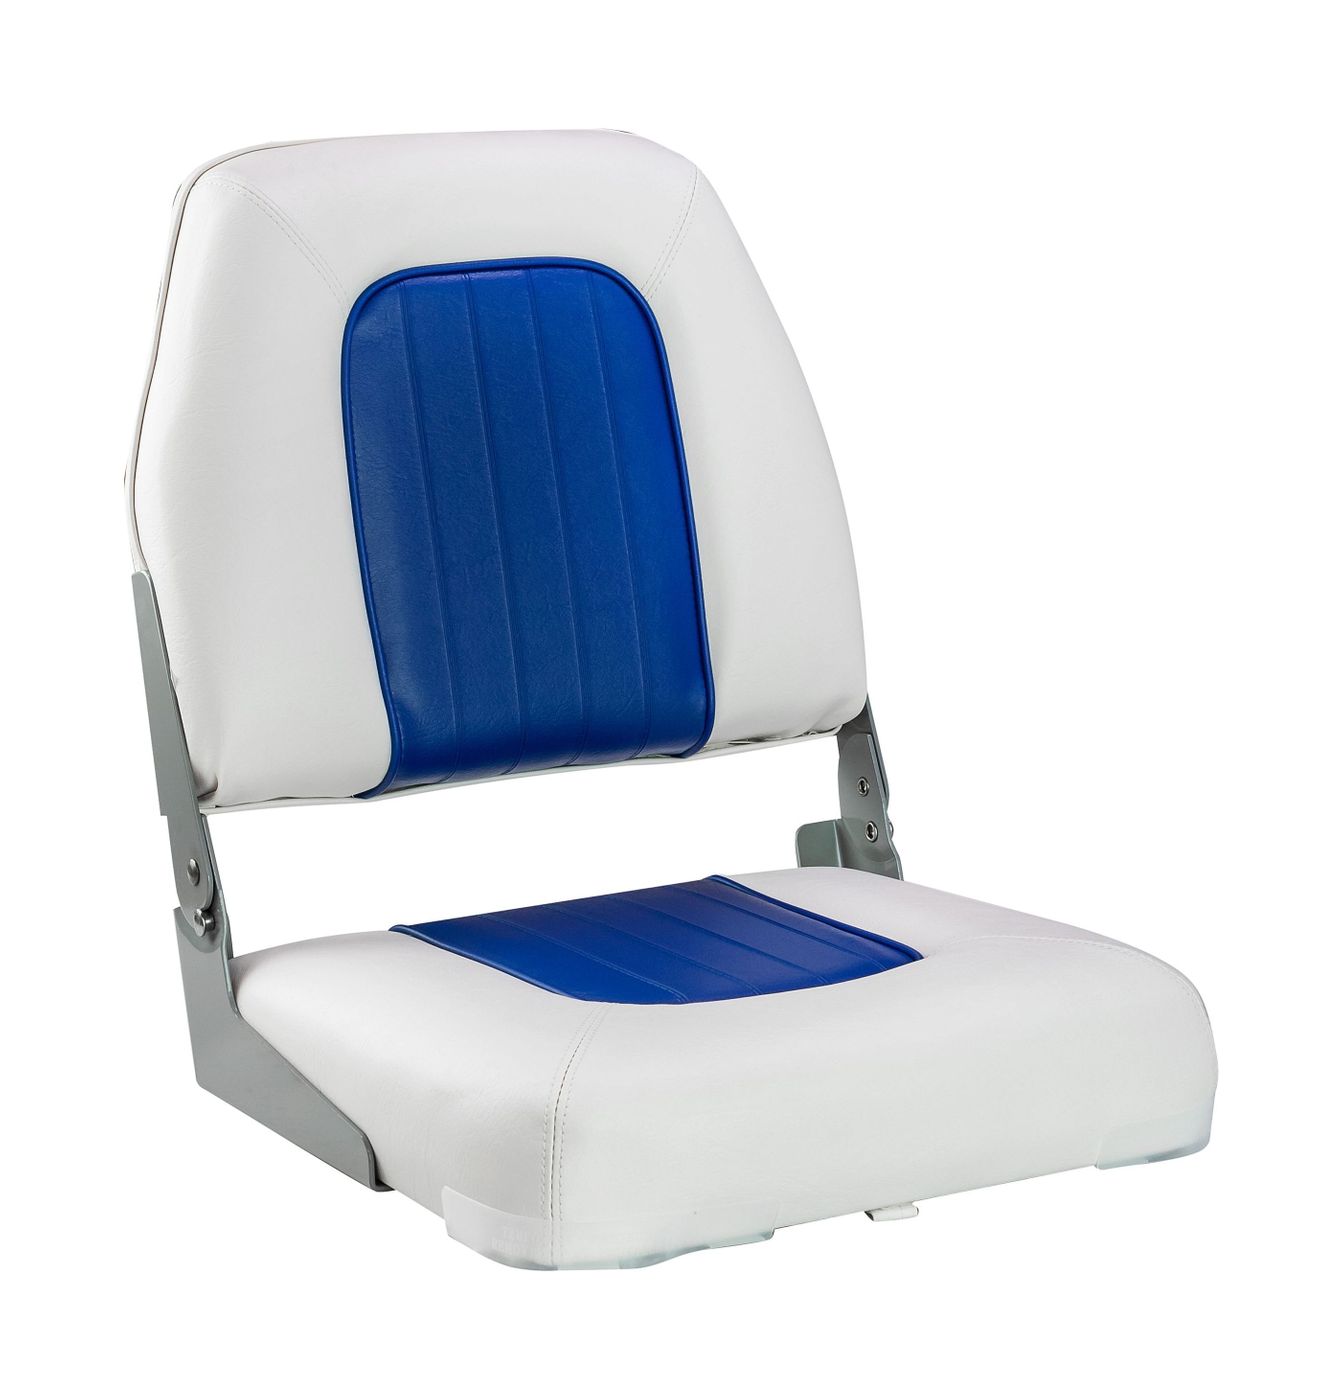 Кресло мягкое складное Deluxe, обивка винил, цвет белый/синий, Marine Rocket 75137WB-MR соковыжималка центробежная starwind sj2326 750 вт синий белый